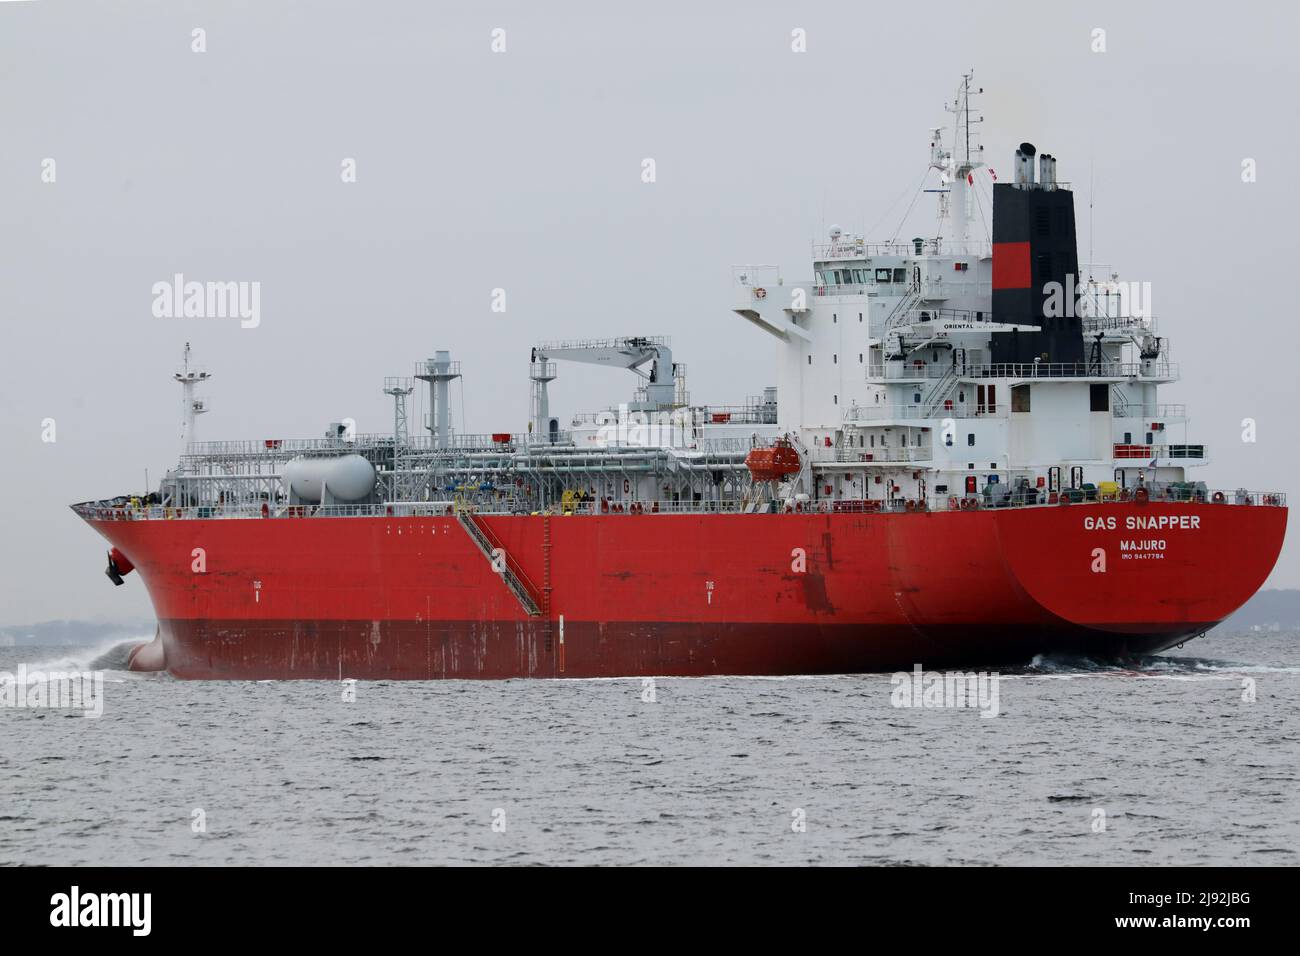 04.01.2022, Helsingborg, Skane lakes, Sweden - Tanker Gas Snapper on the Baltic Sea. 00S220104D158CAROEX.JPG [MODEL RELEASE: NO, PROPERTY RELEASE: NO Stock Photo